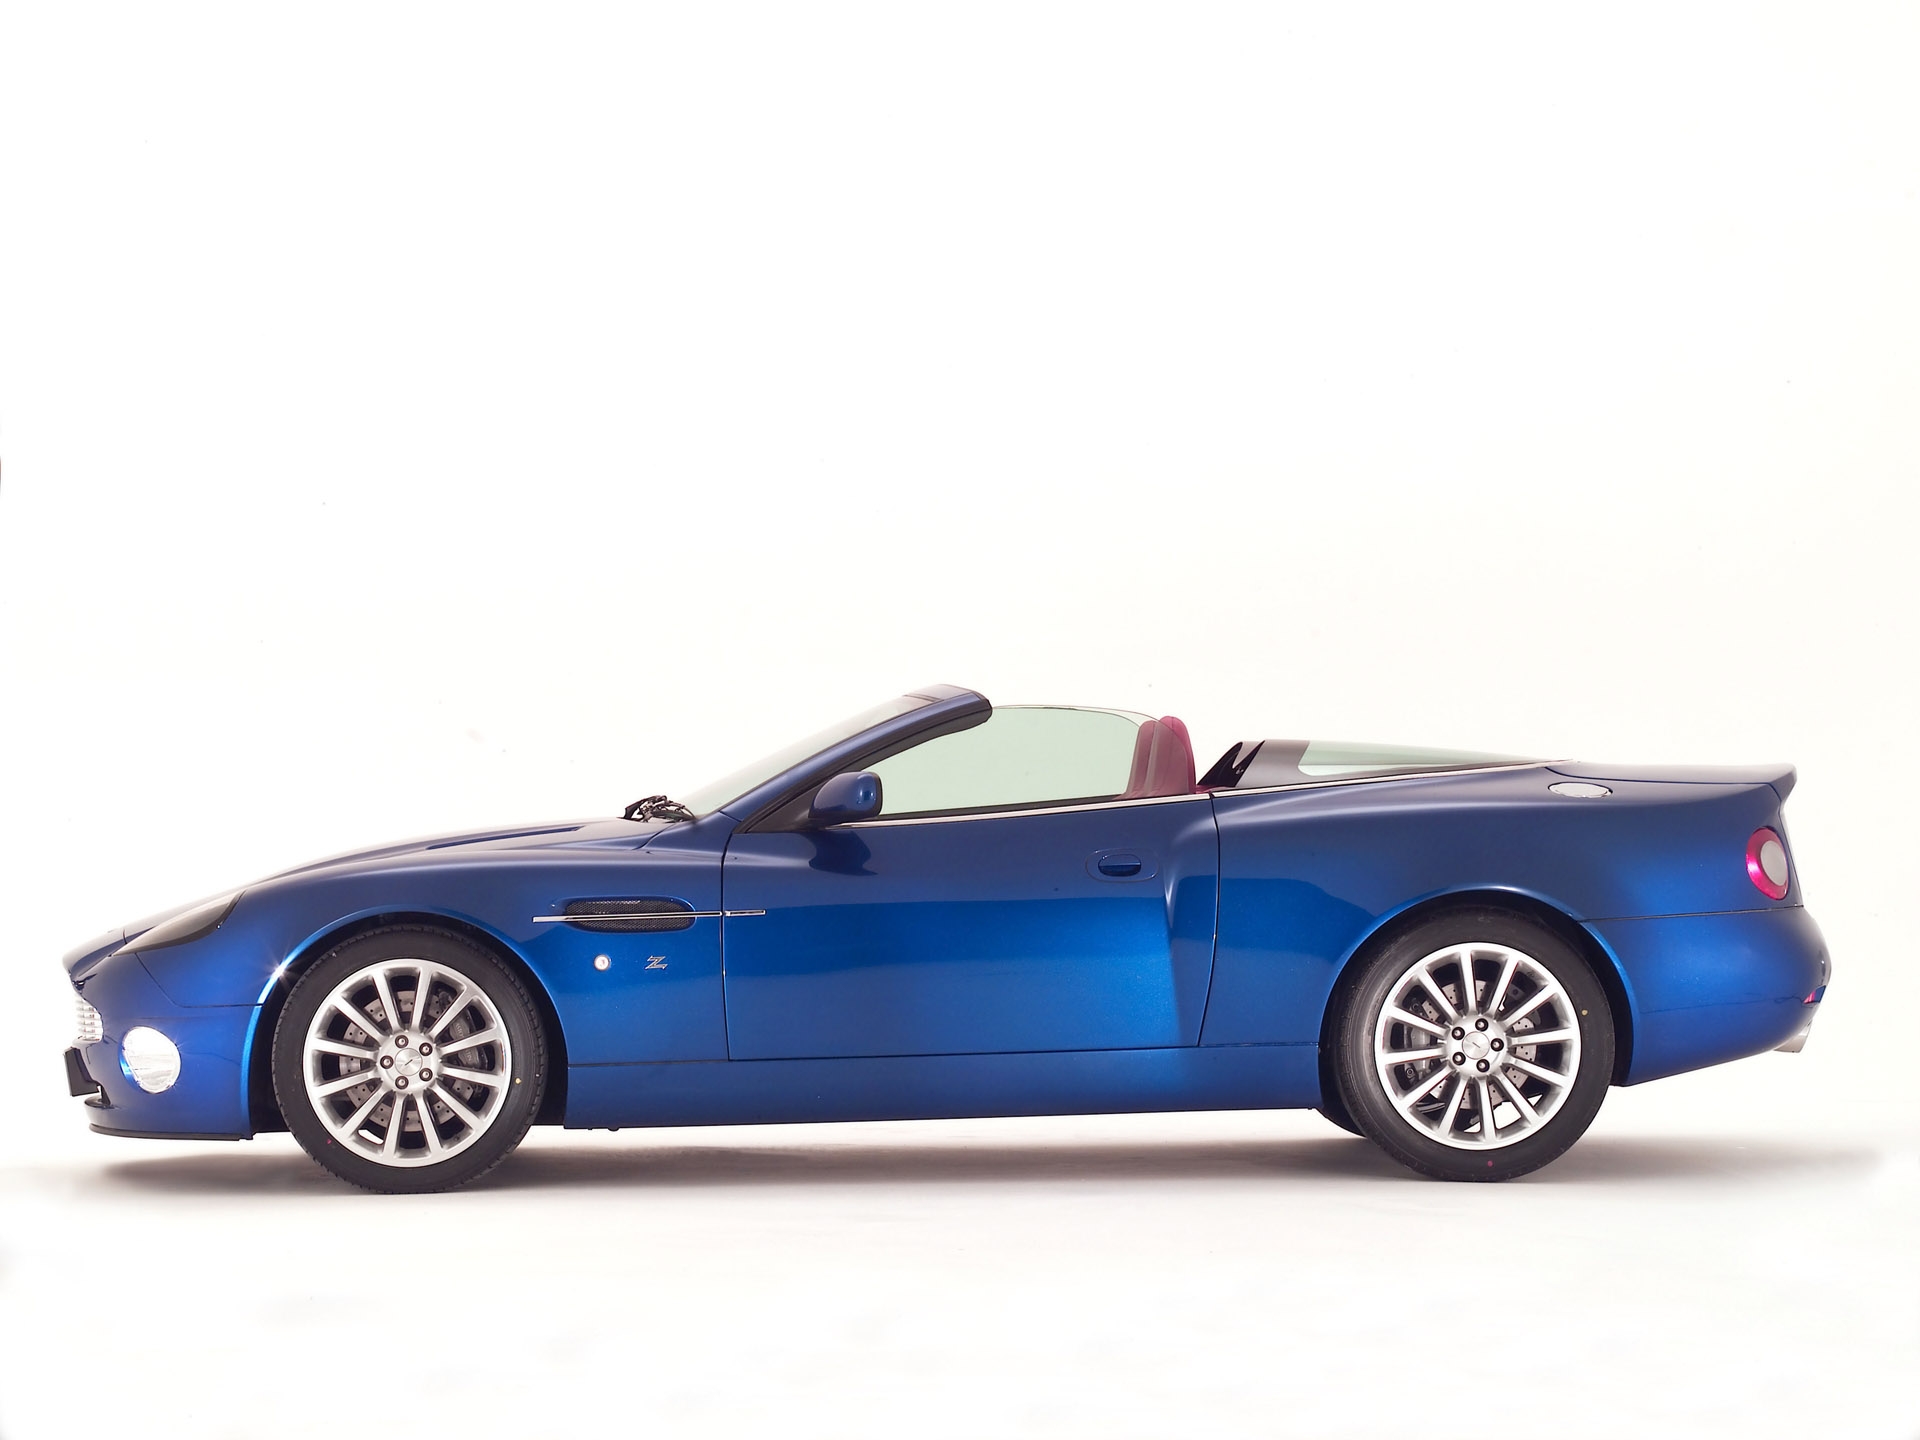 aston martin, auto, cars, blue, side view, style, 2004, v12, vanquish Image for desktop